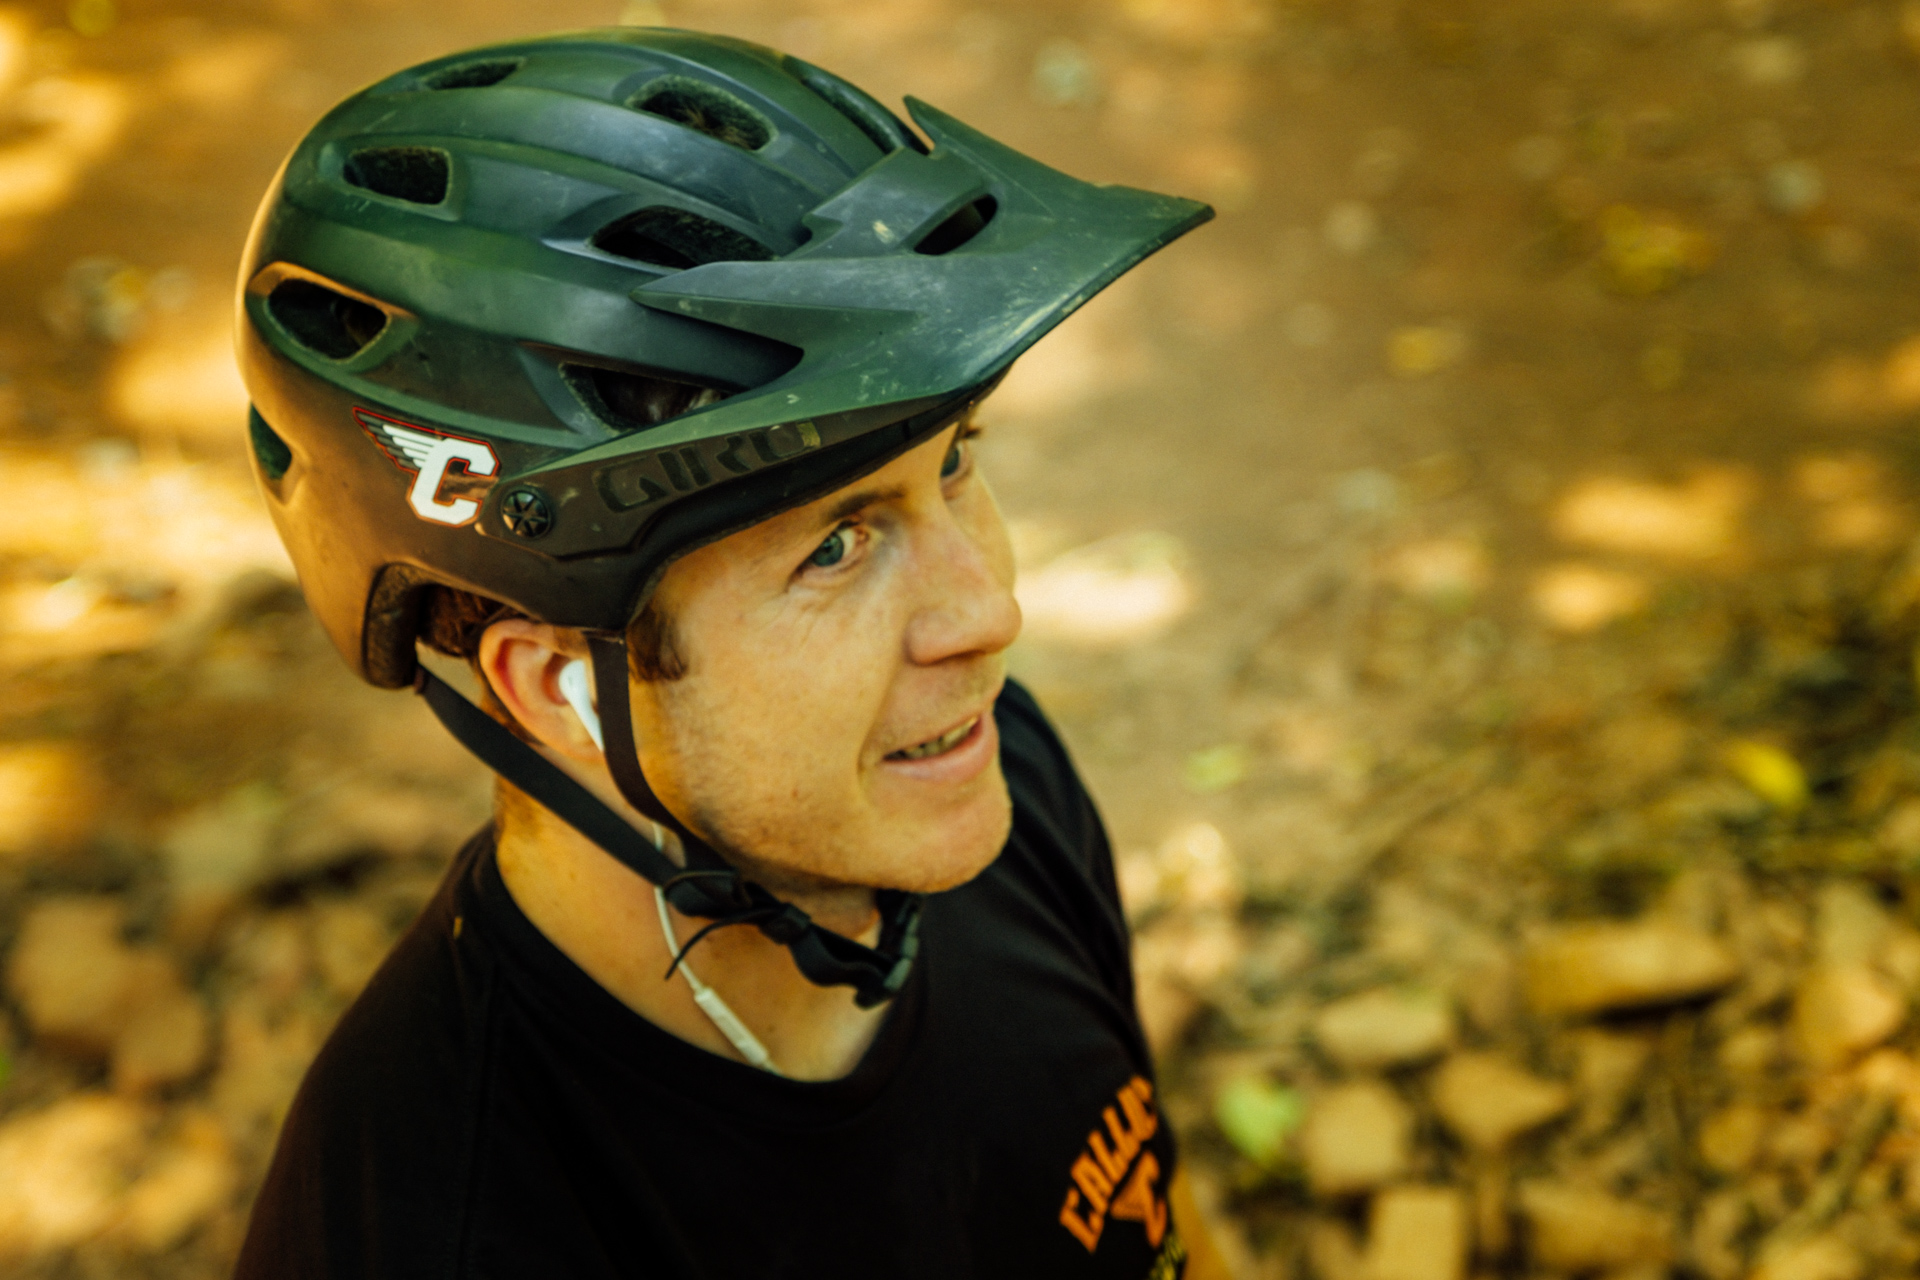 Devon White sporting the Callus logo on his helmet.